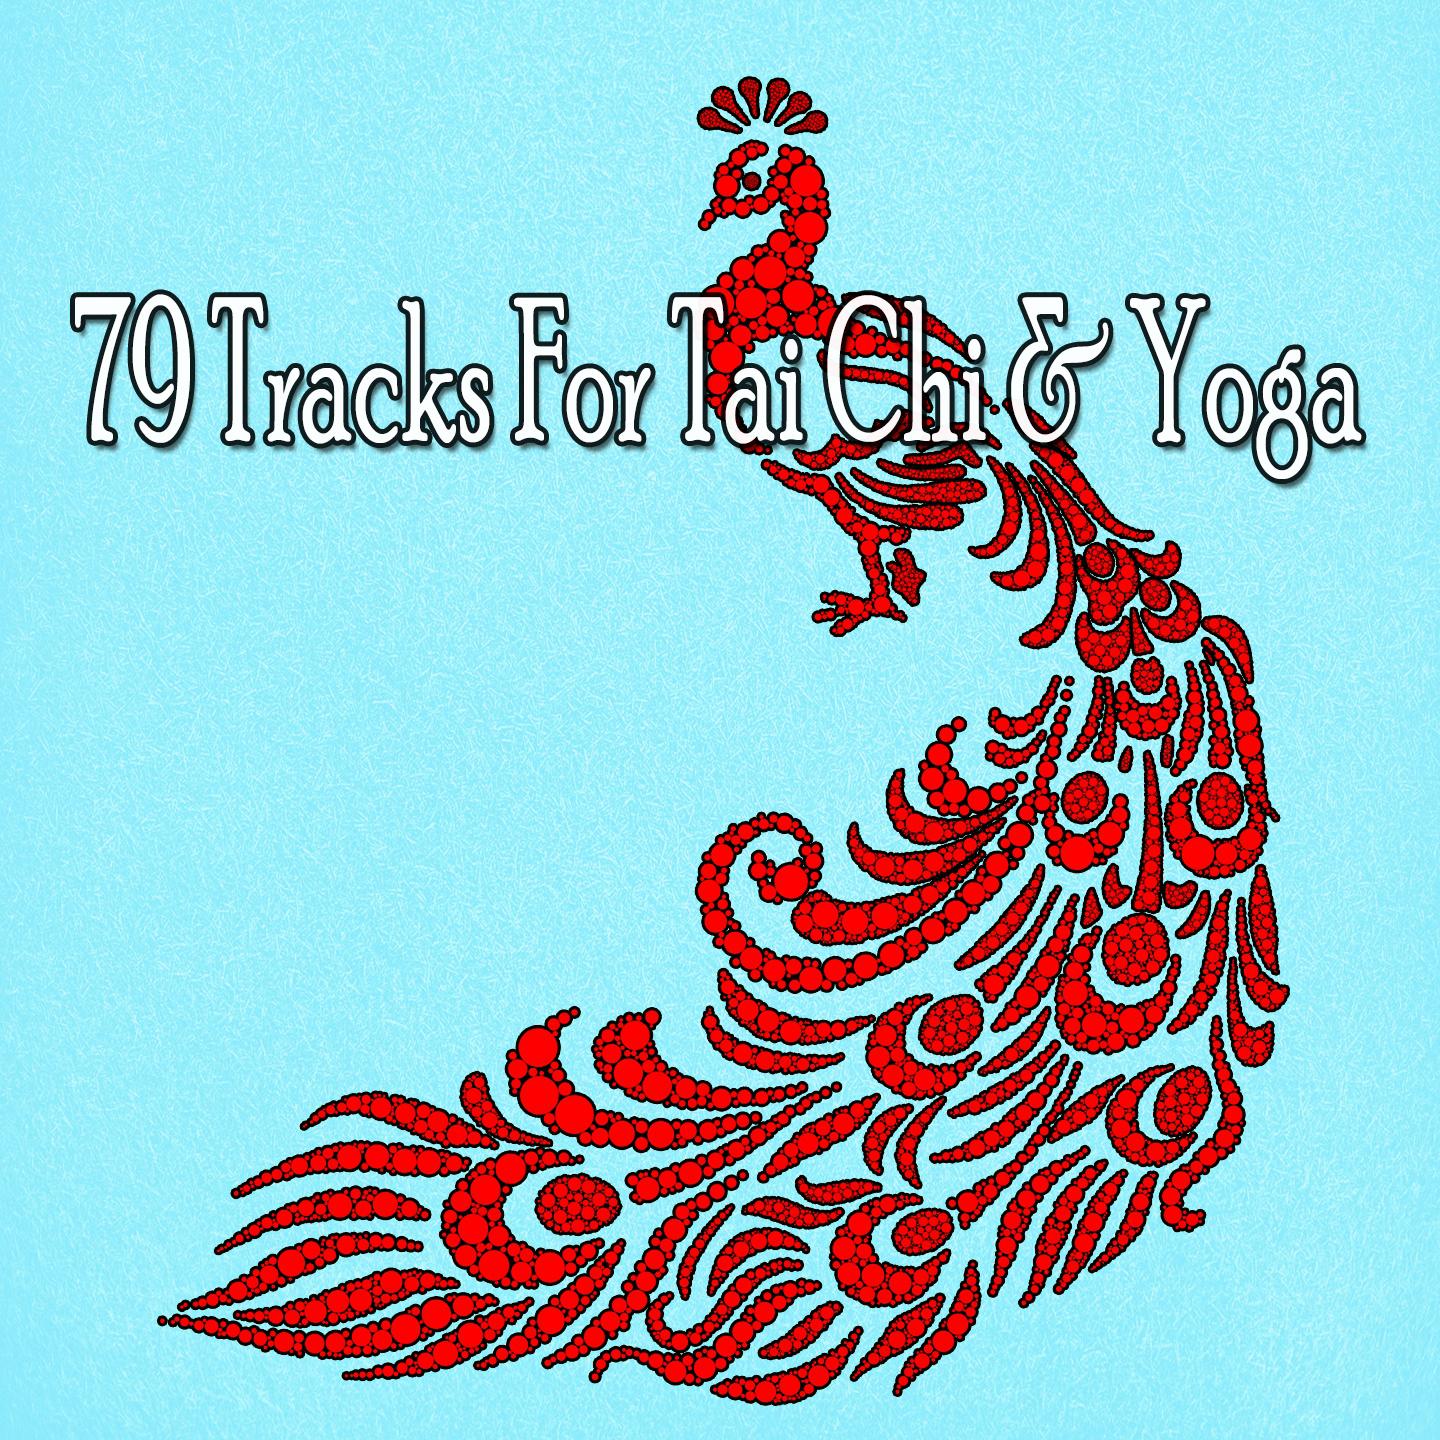 79 Tracks for Tai Chi & Yoga